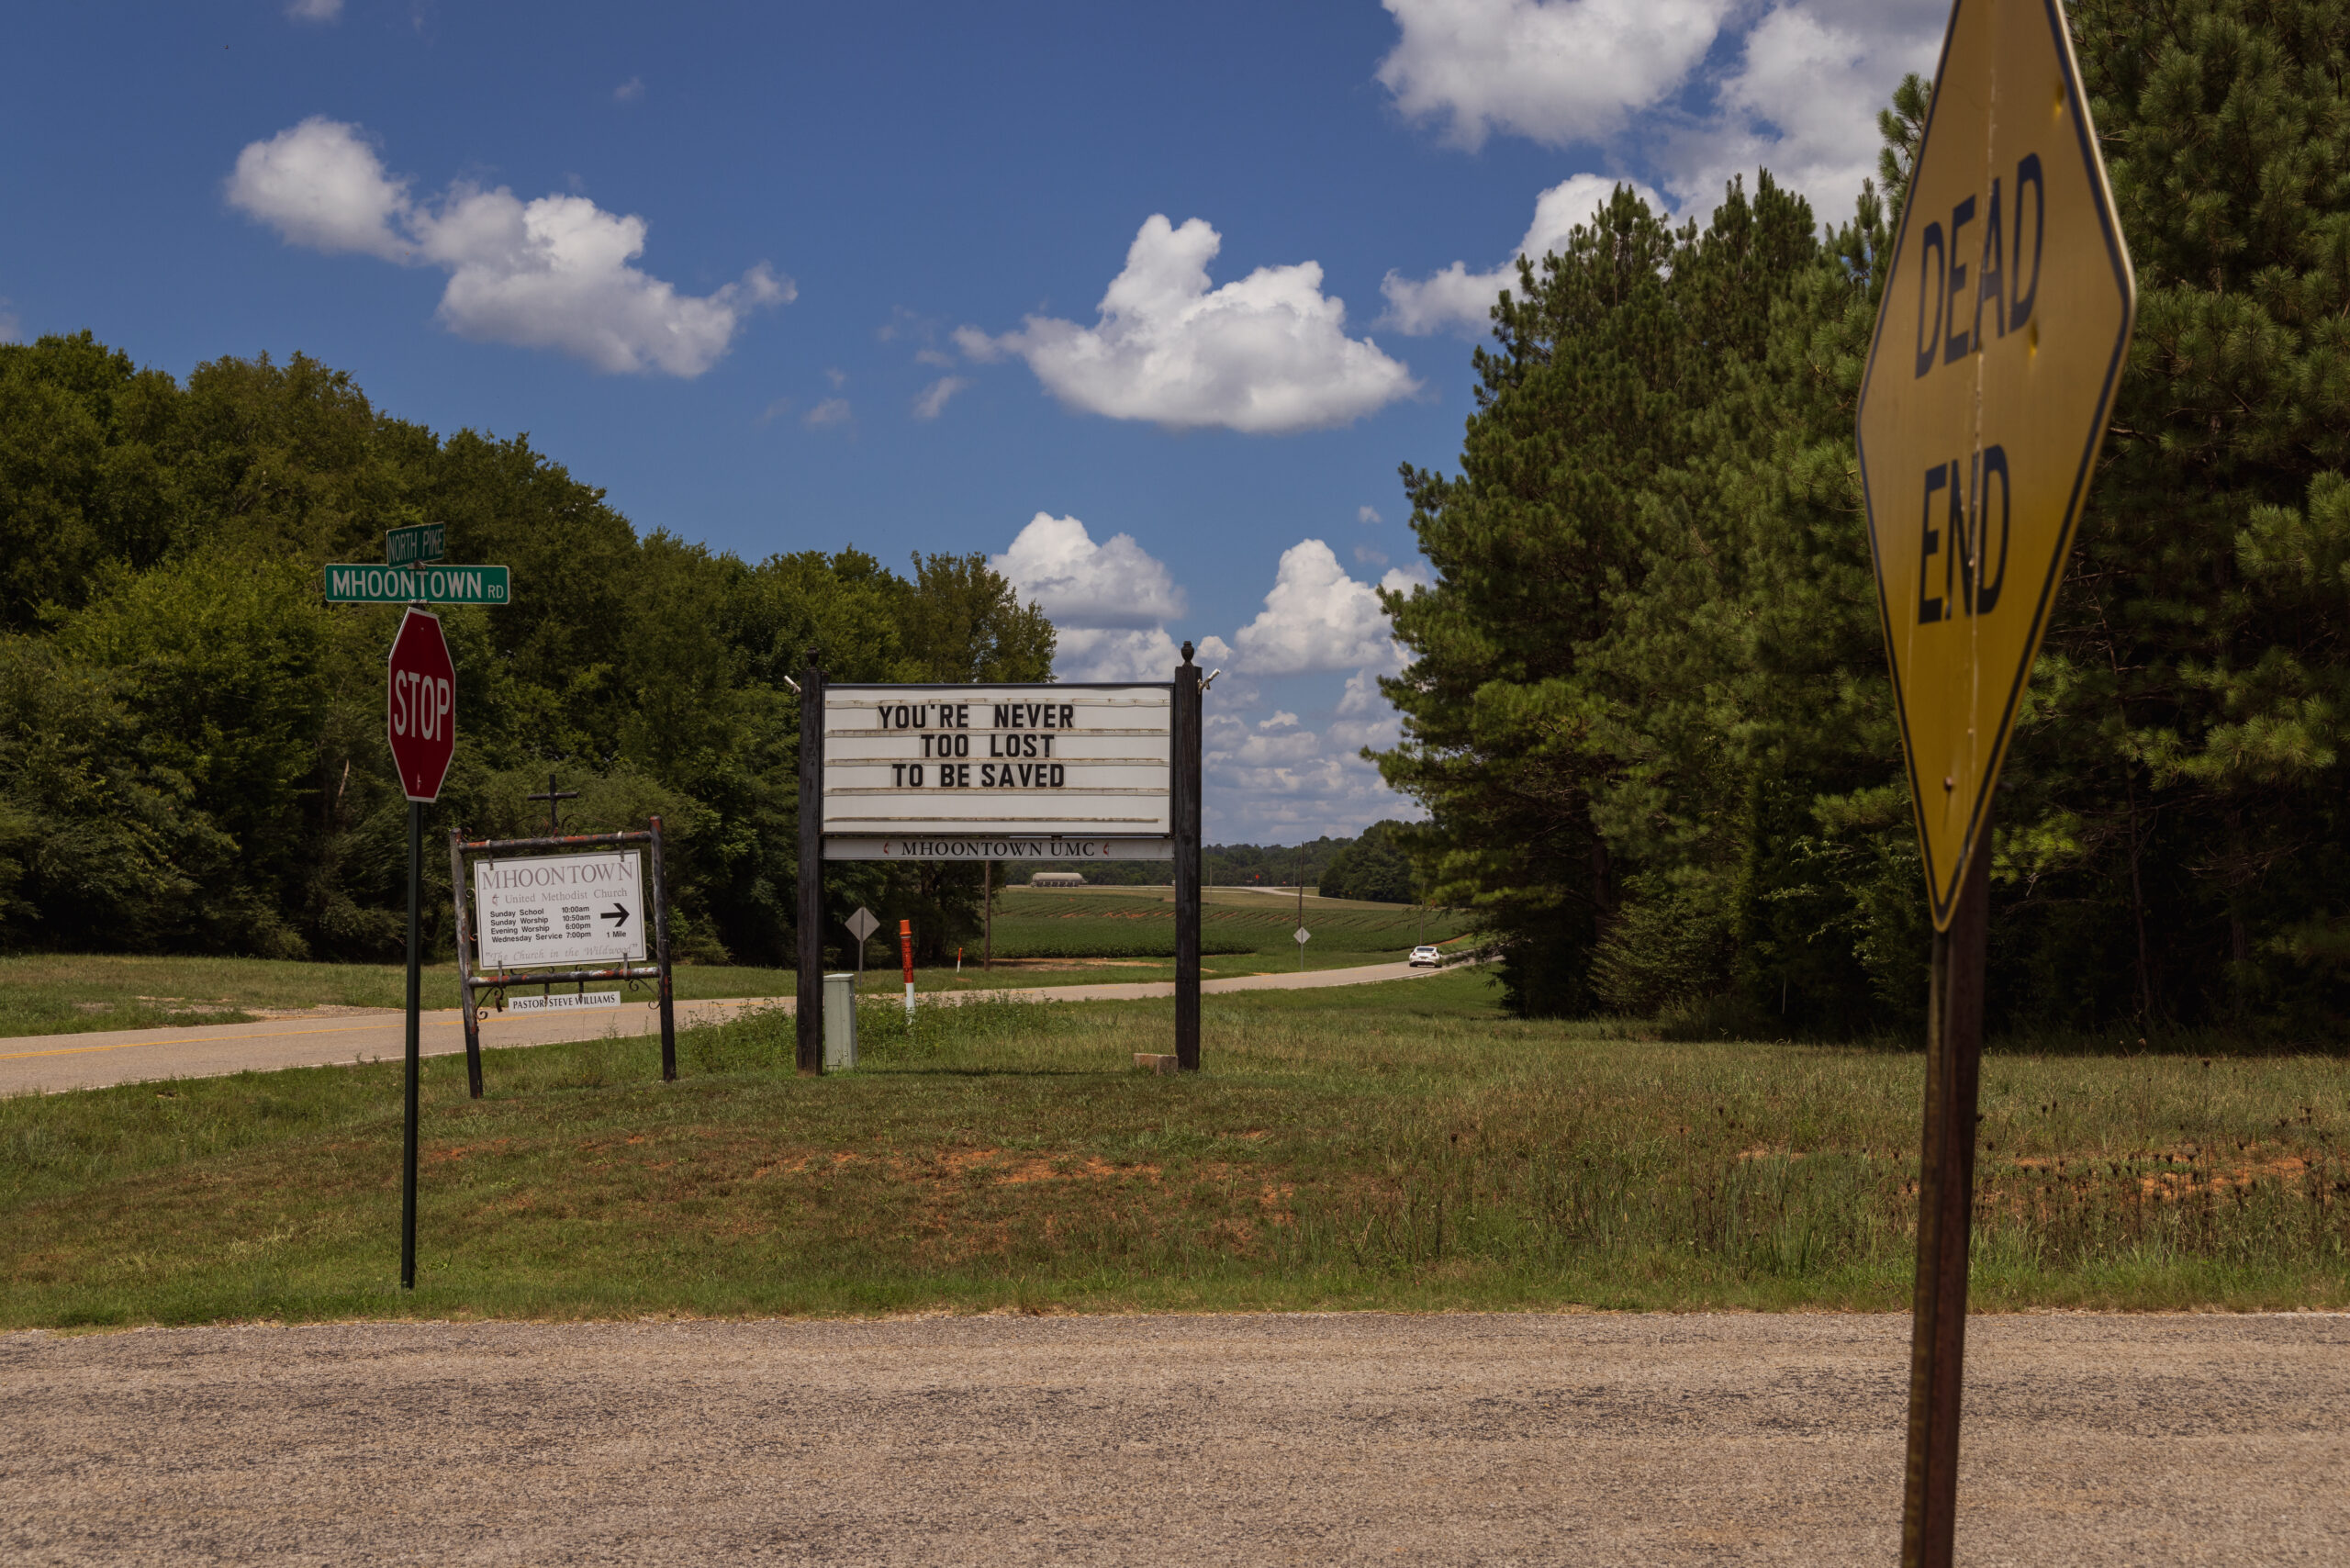 A church sign on a dirt road.